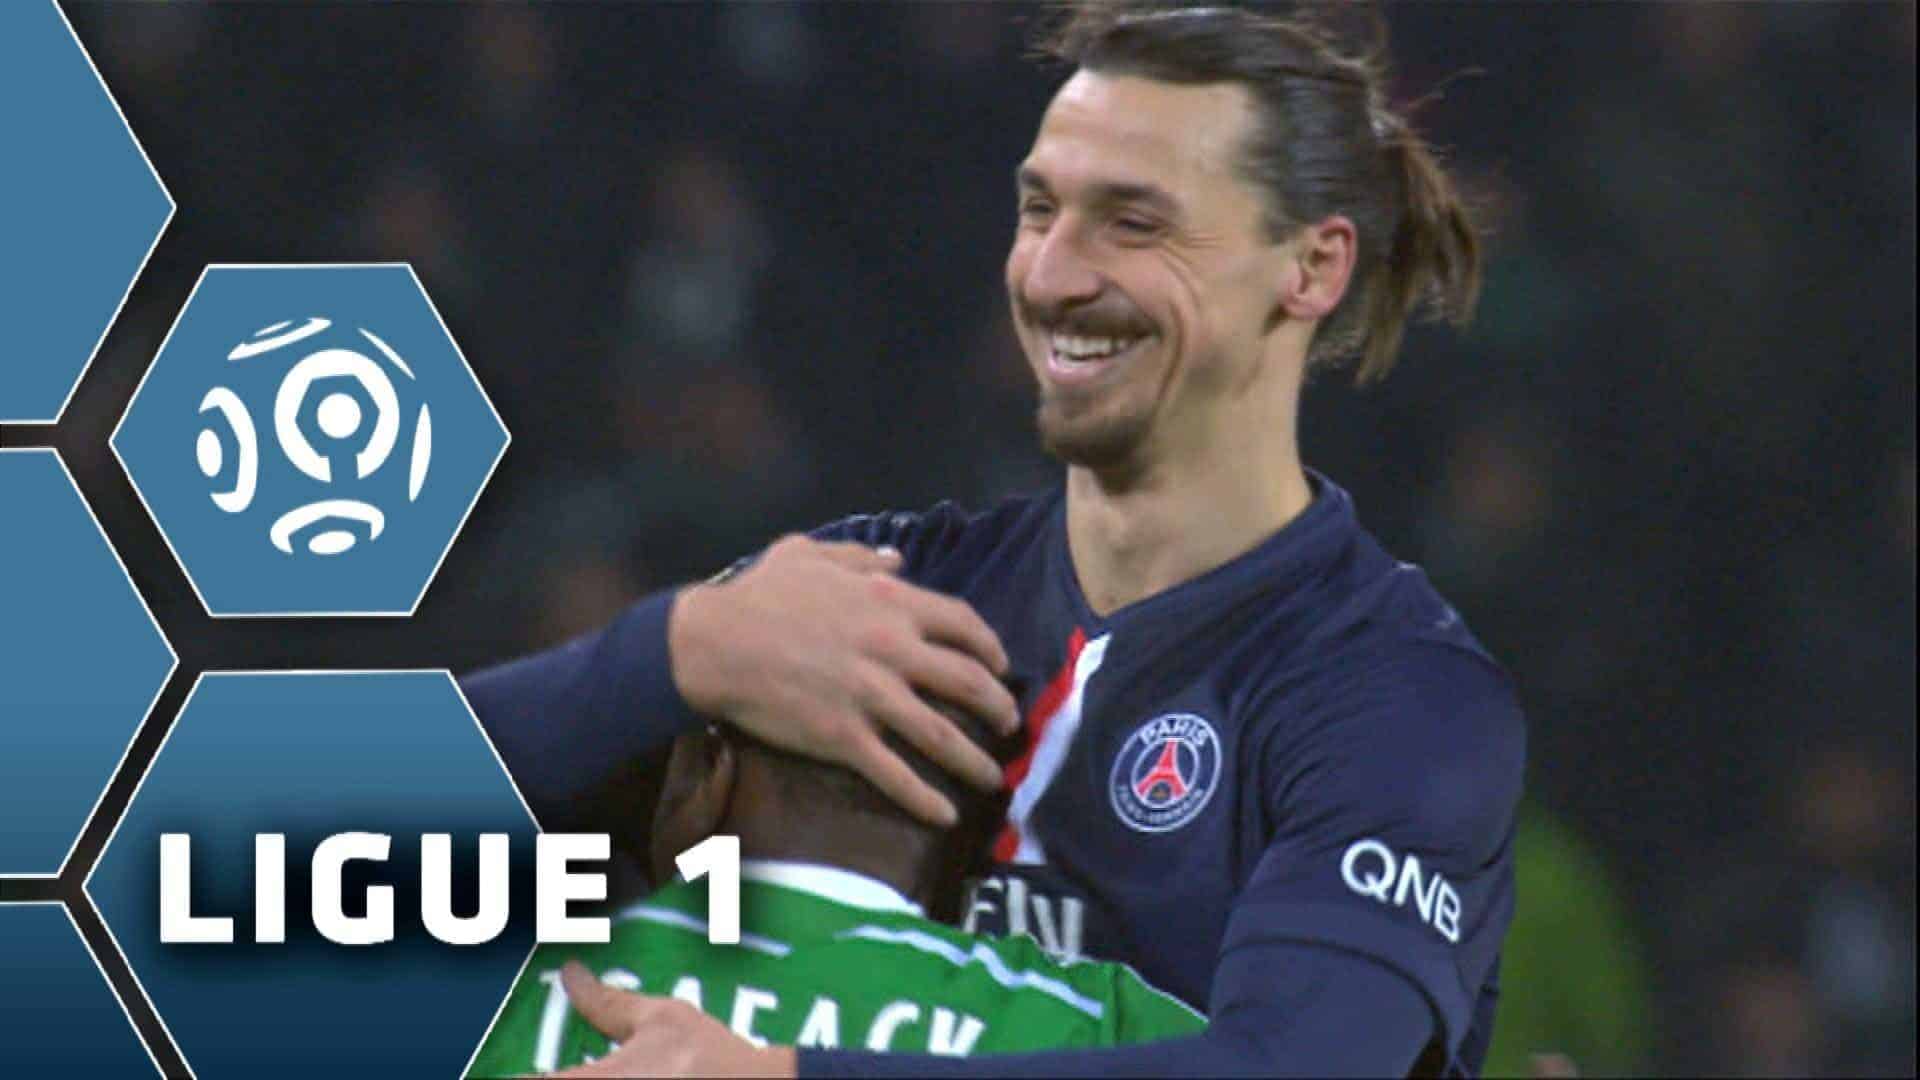 All About Ligue 1 - France's Premier Football League ⋆ Sportycious